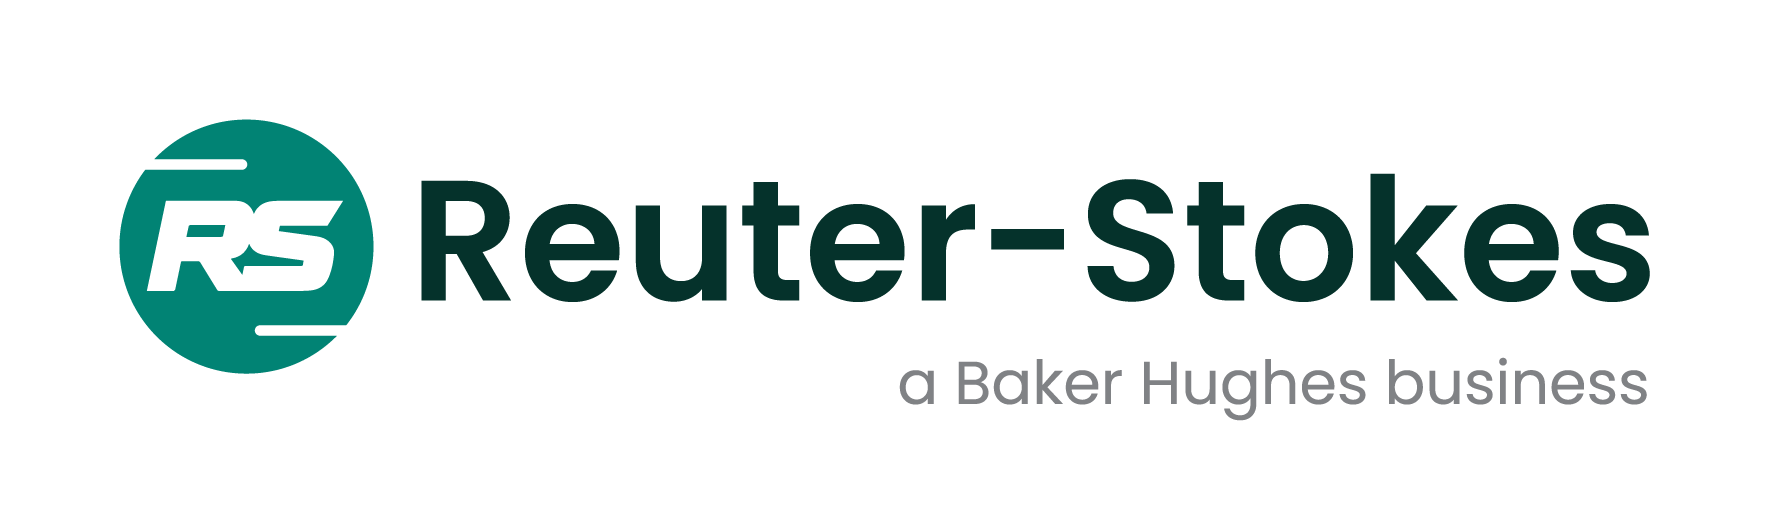 Reuter-Stokes, a Baker Hughes business 首页